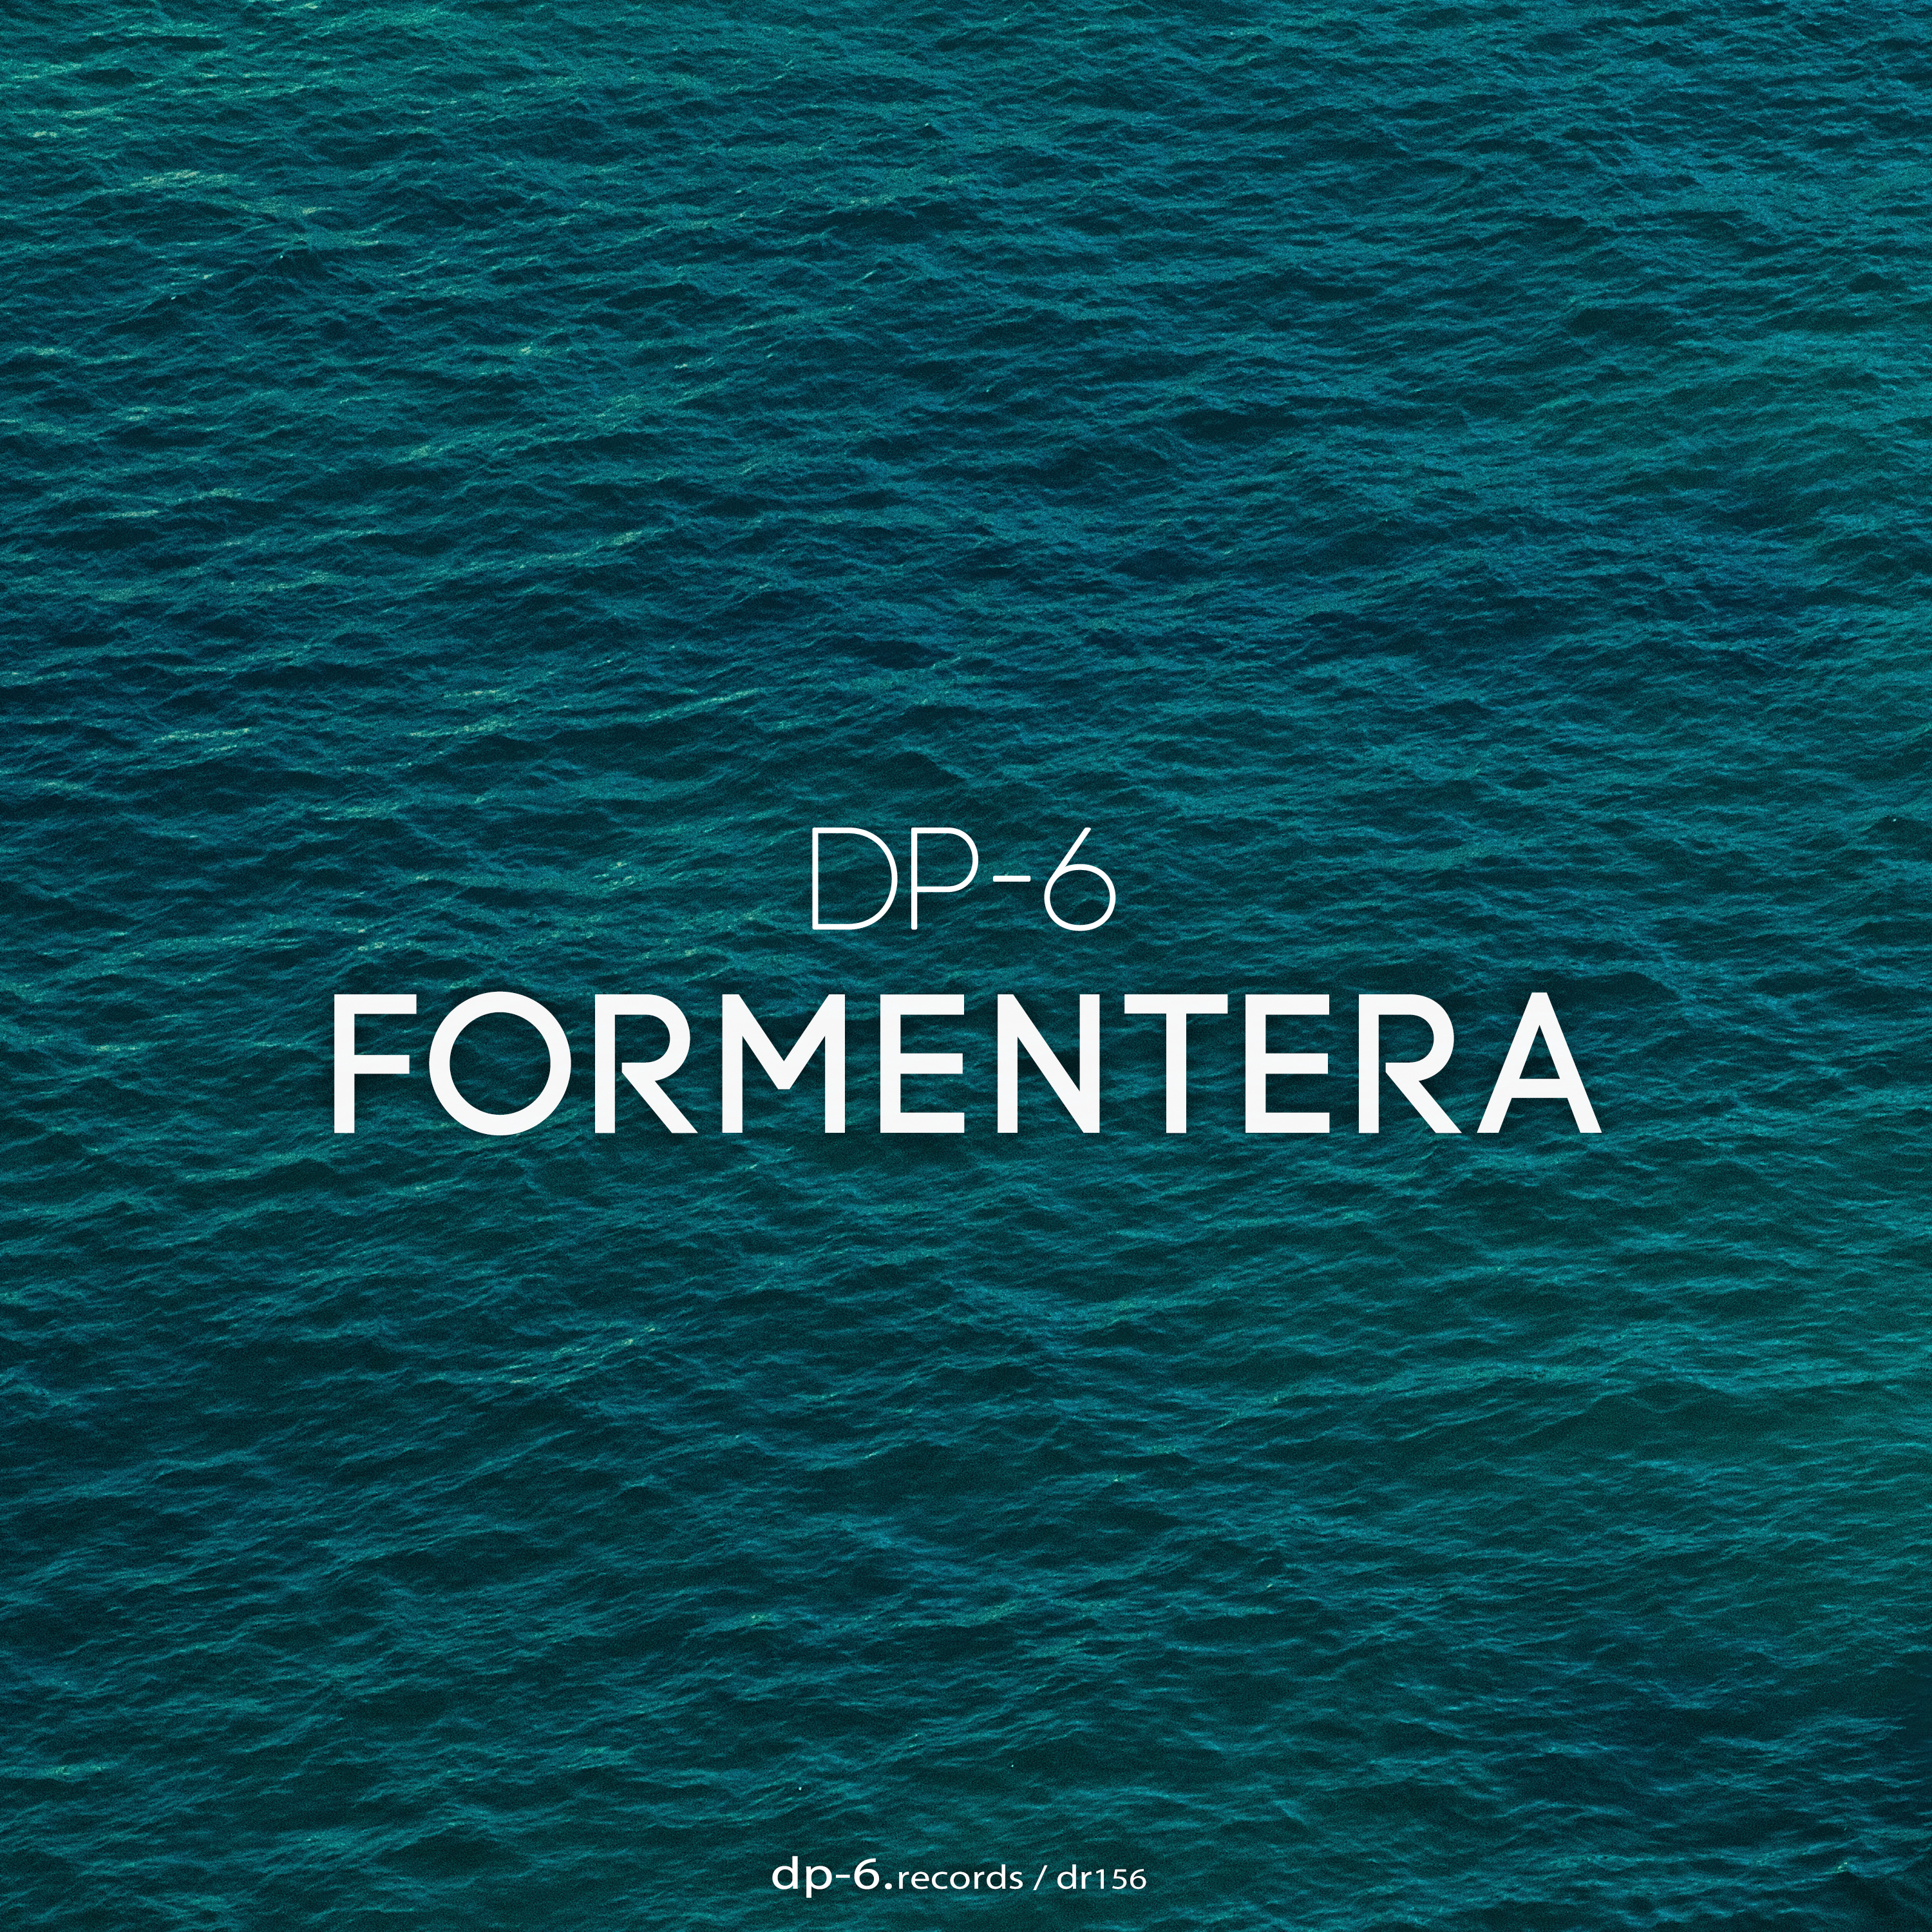 DP-6 Formentera